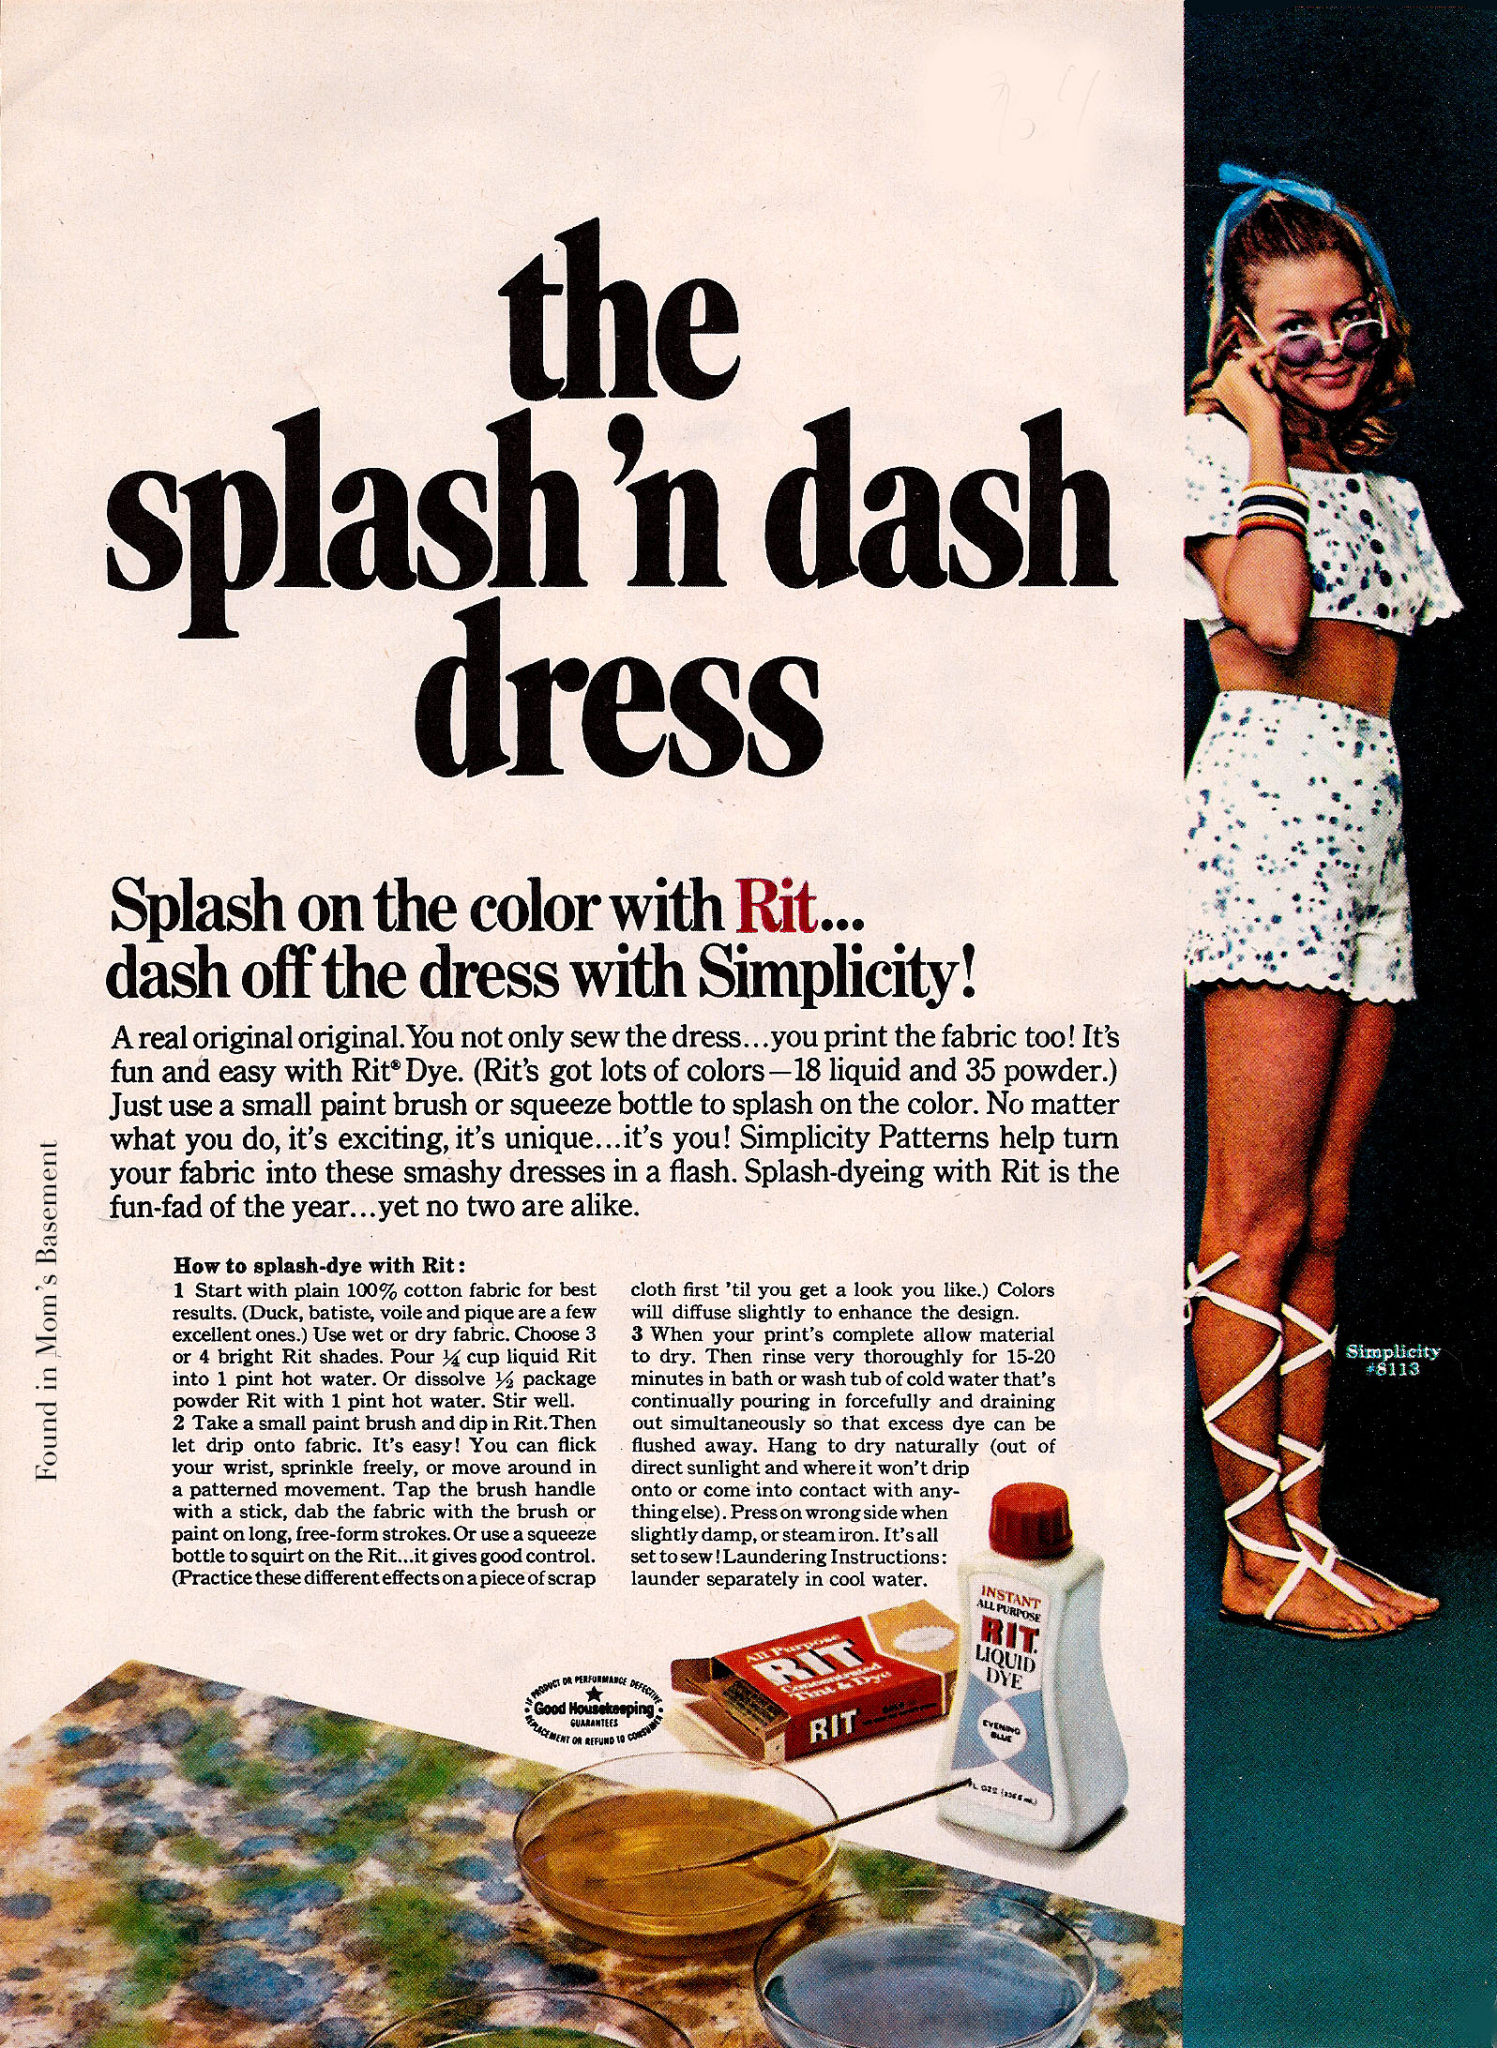 Vintage Rit ad. "The splash 'n dash dress" 